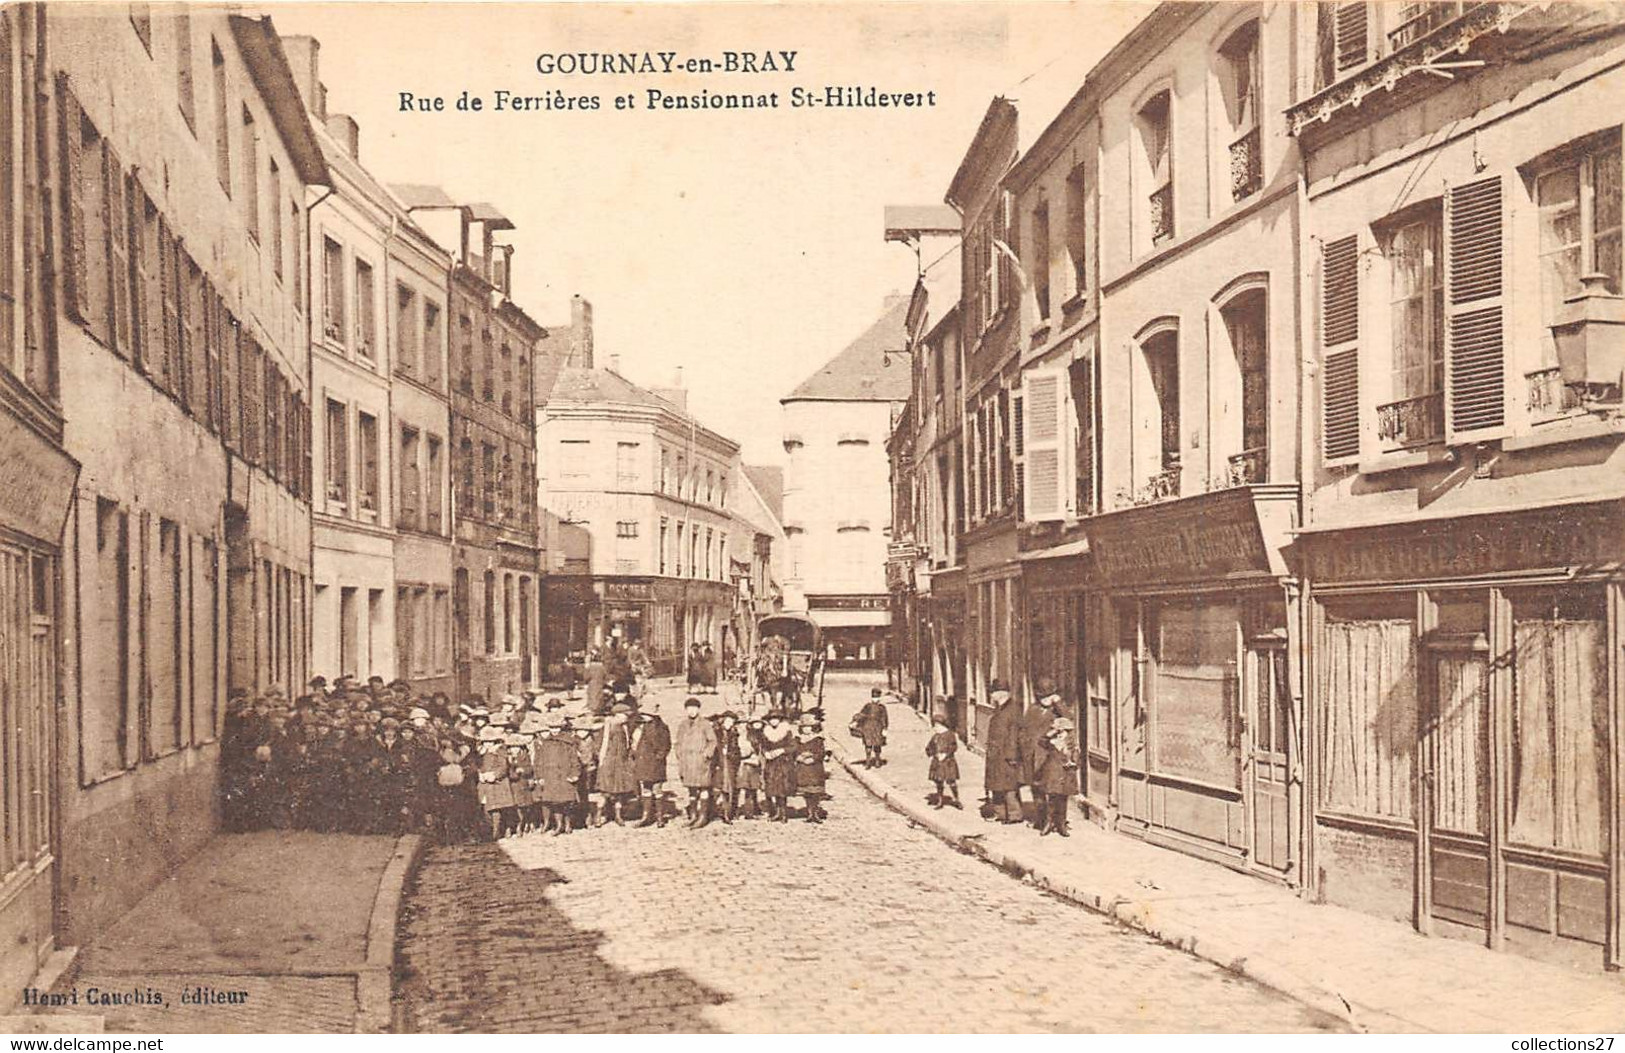 76-GOURNAY-EN-BRAY- RUE DE FERRIERES ET PENSIONNAT ST-HILDEVERT - Gournay-en-Bray